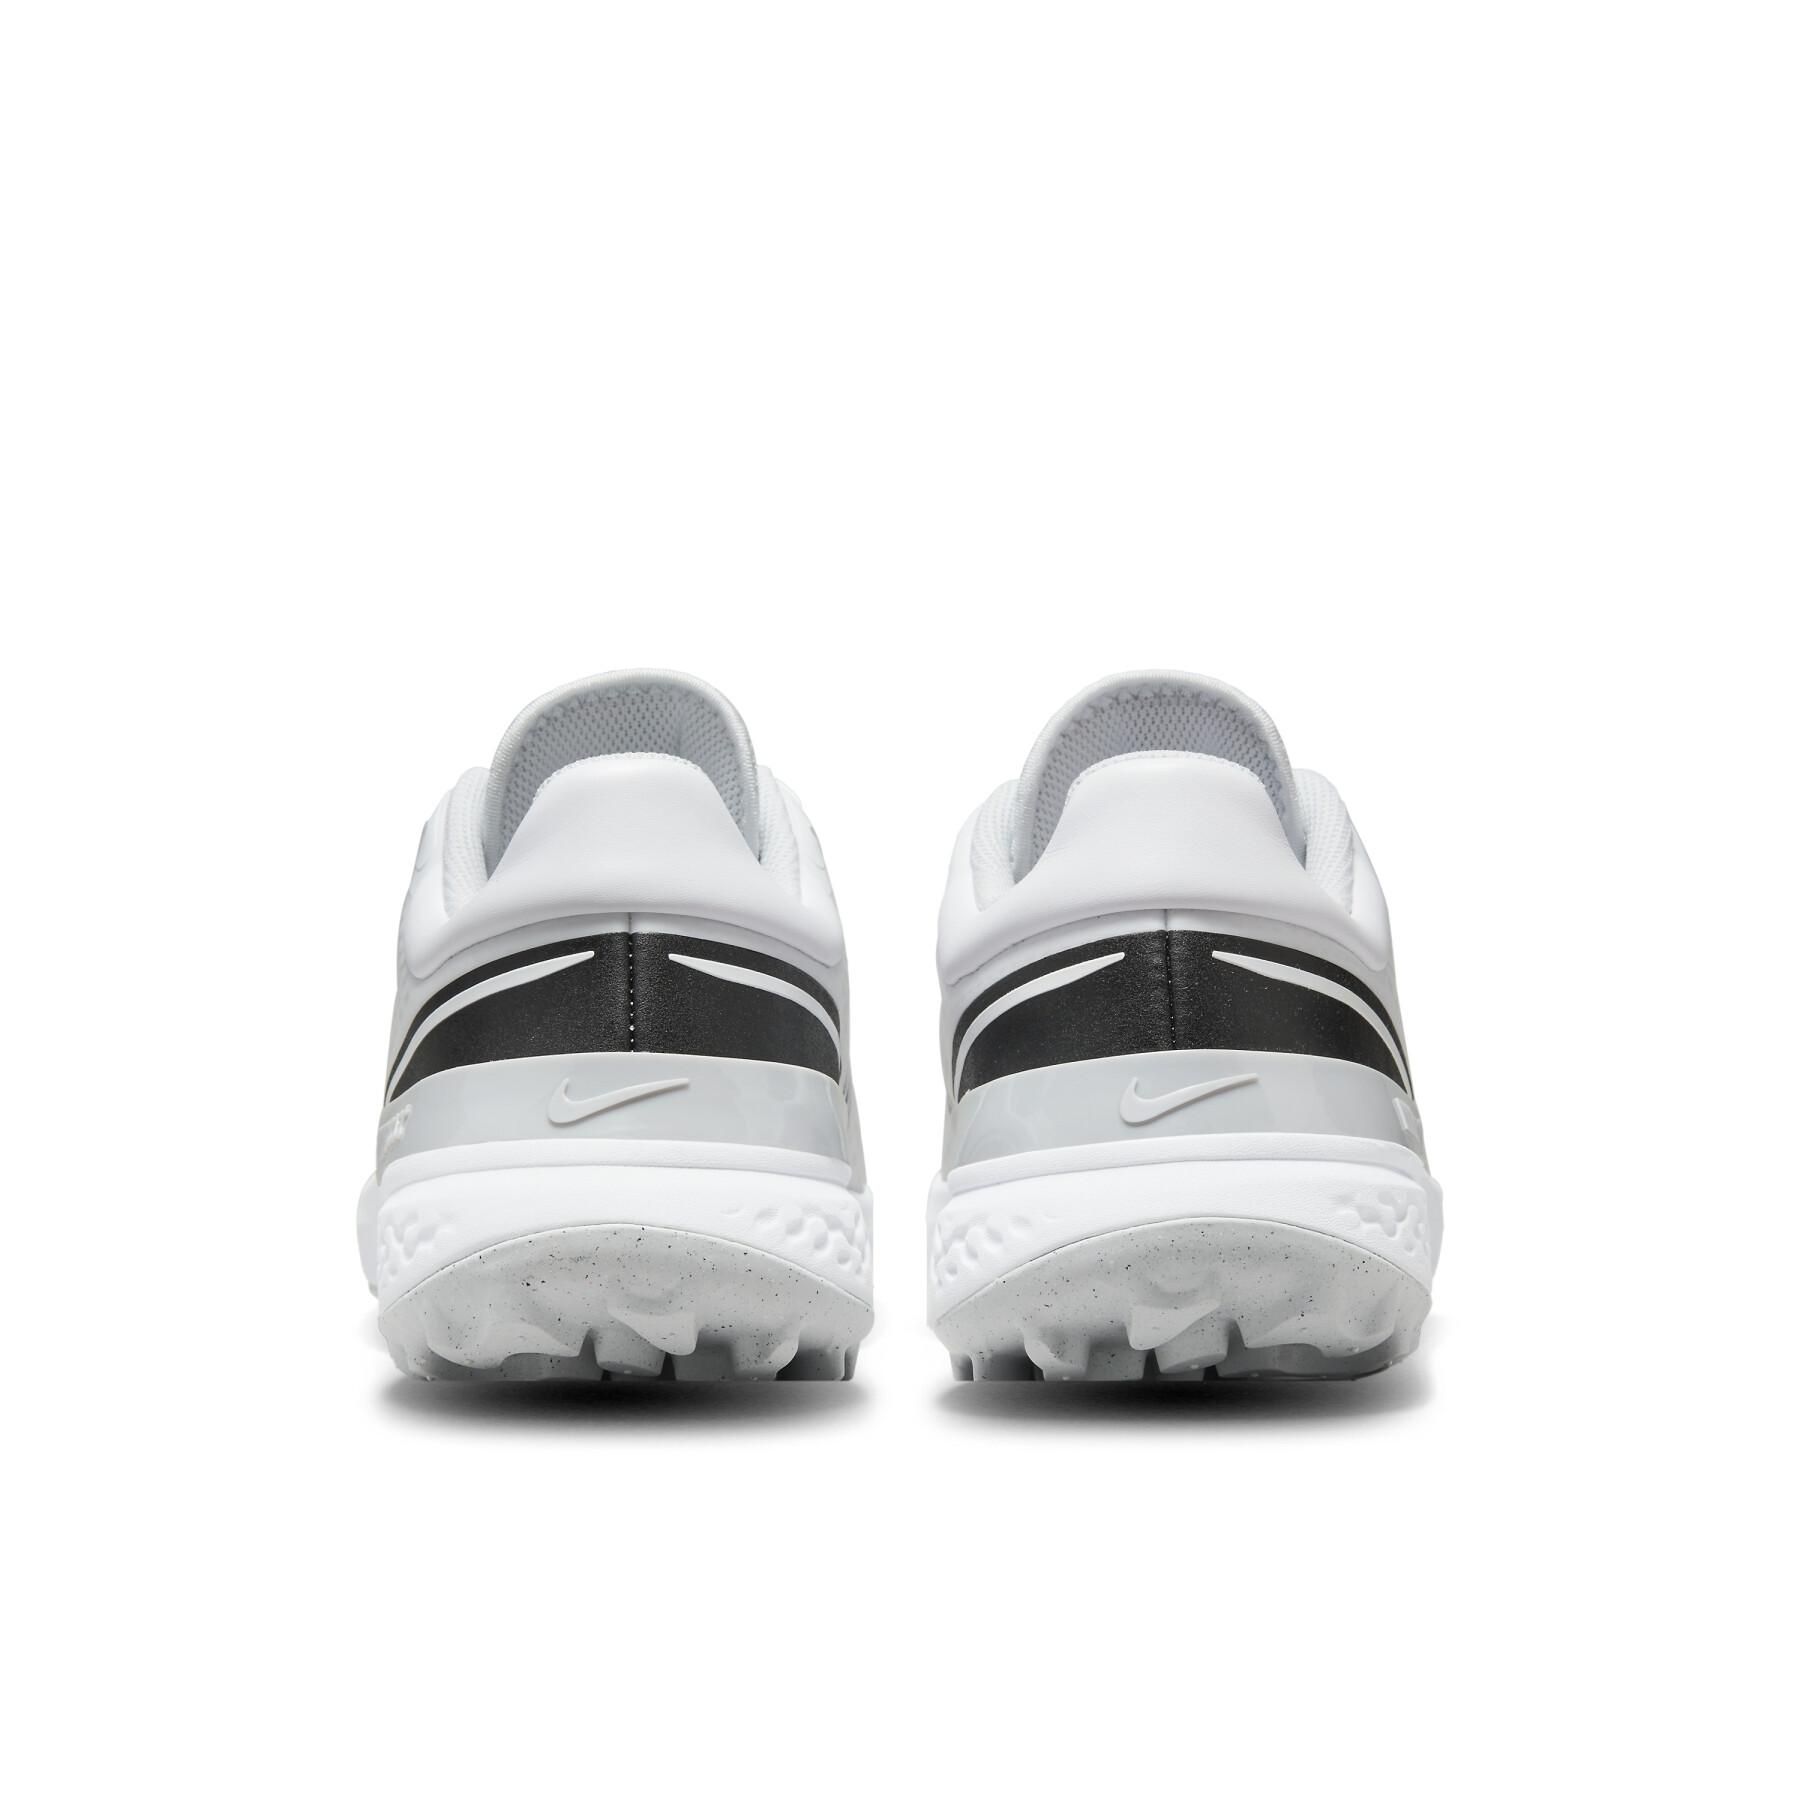 Chaussures de golf Nike Infinity Pro 2